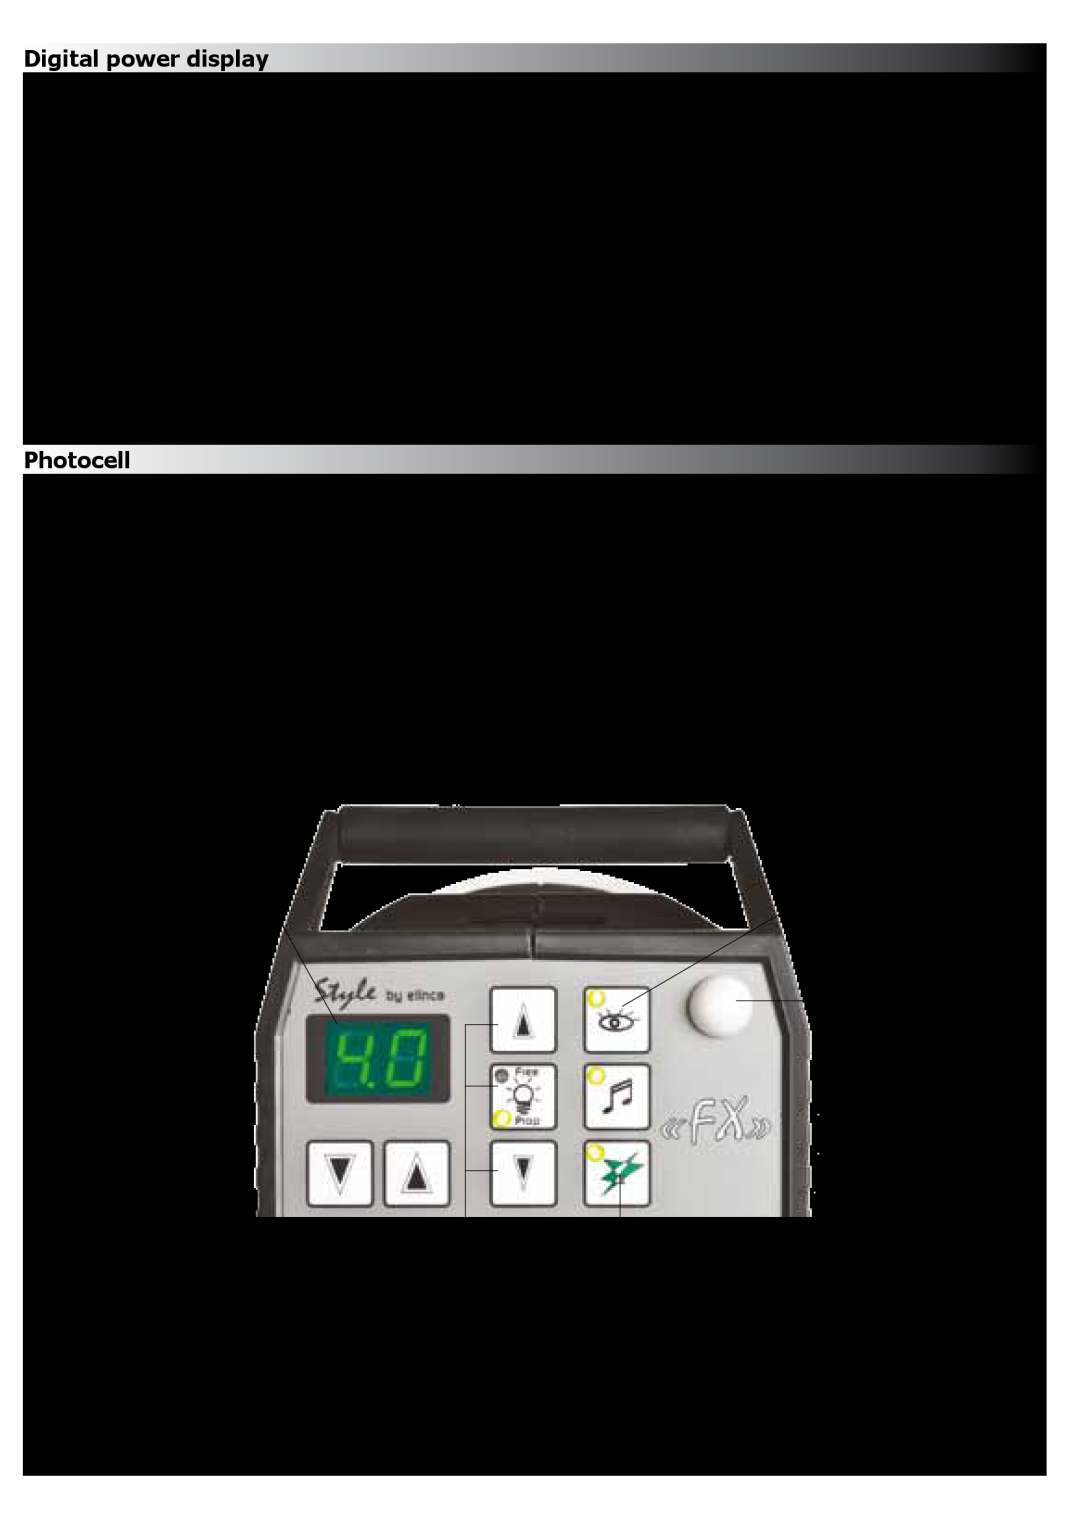 Elinchrom FX 100, 400 manual Digital power display, Photocell 